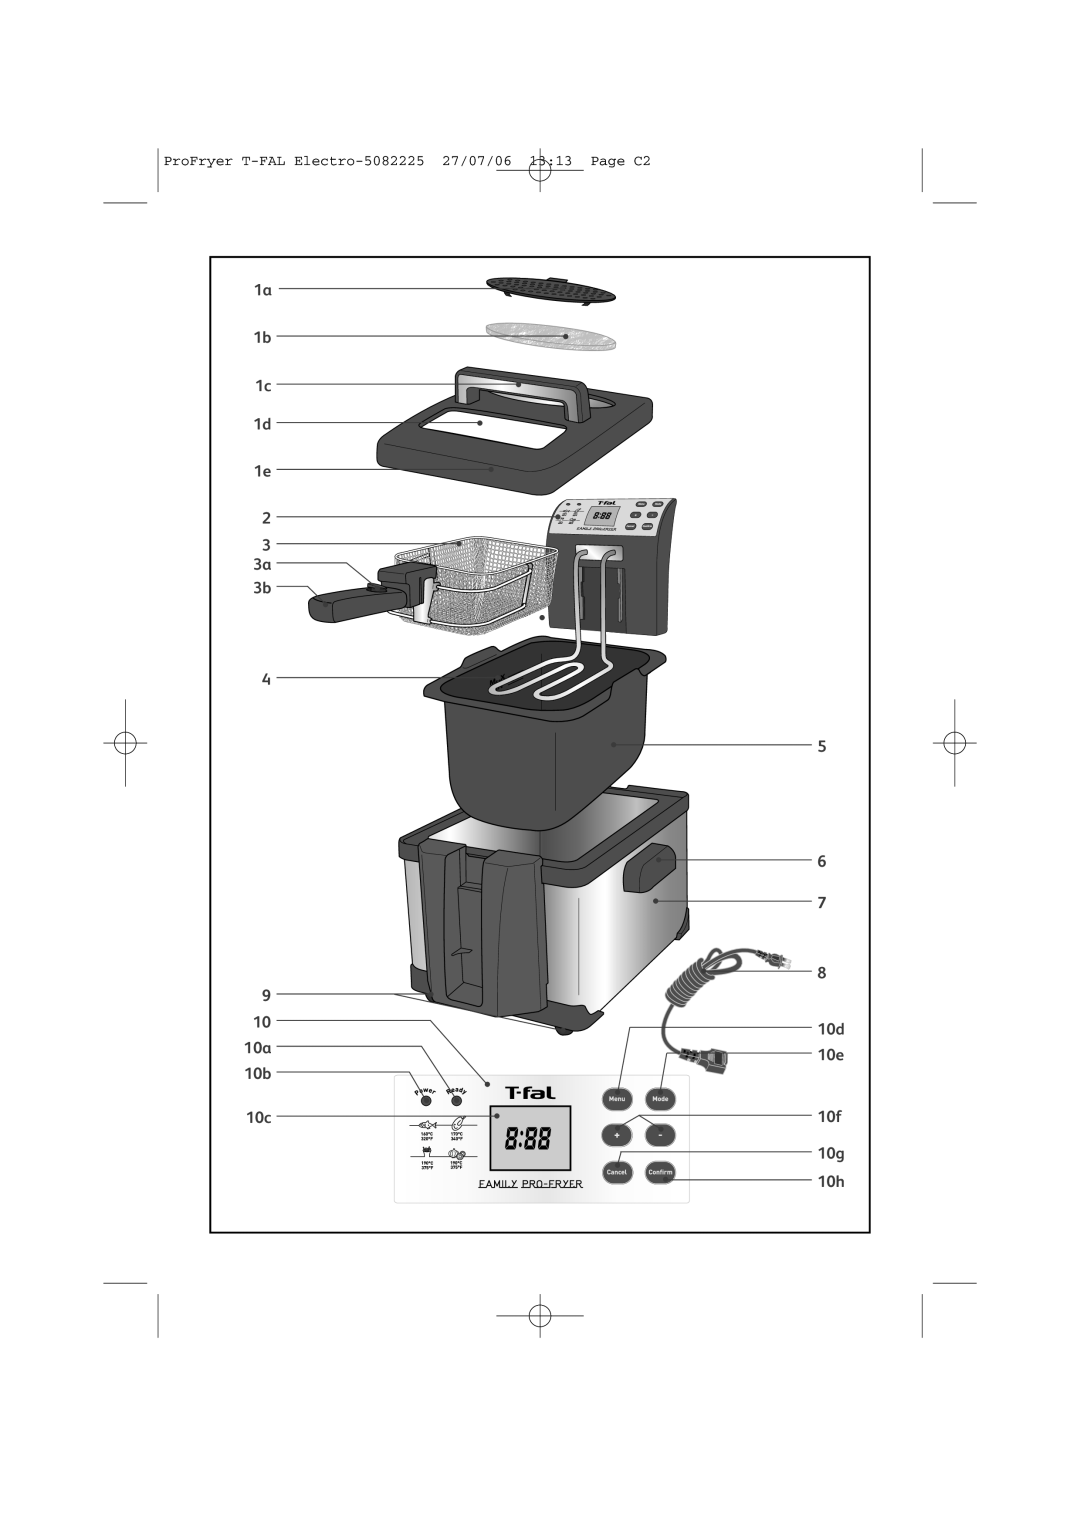 Groupe SEB USA - T-FAL Pro-Fryer manual 27/07/06, 1313, Page C2, ProFryer T-FAL Electro-5082225 